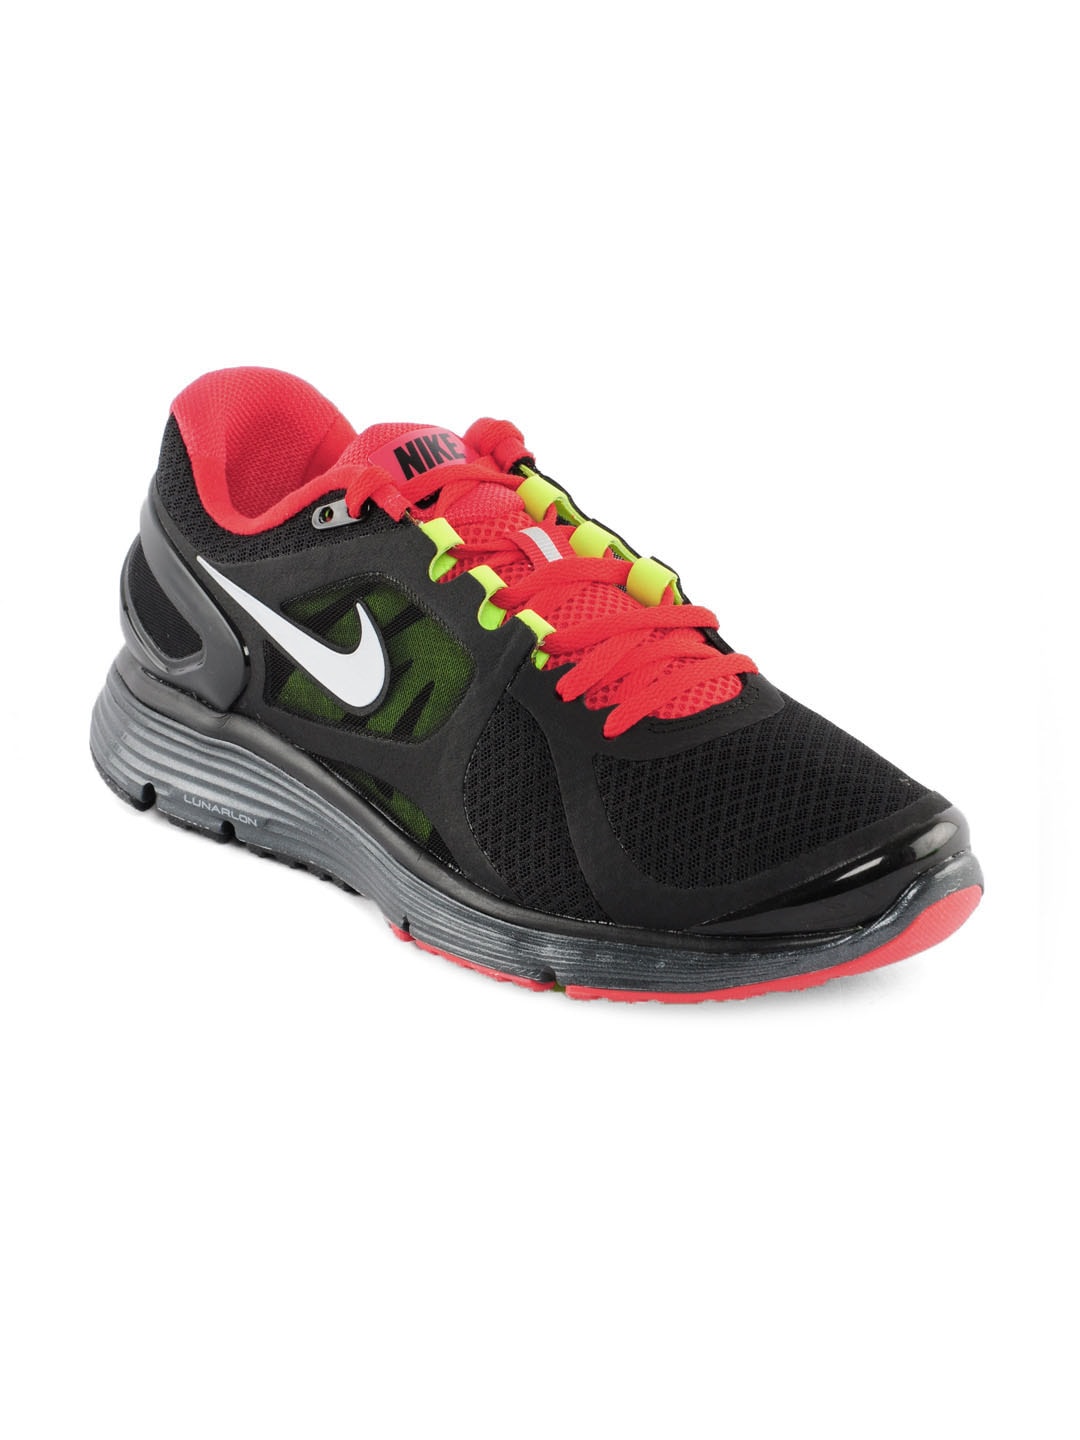 Nike Men Lunareclipse Black Sports Shoes